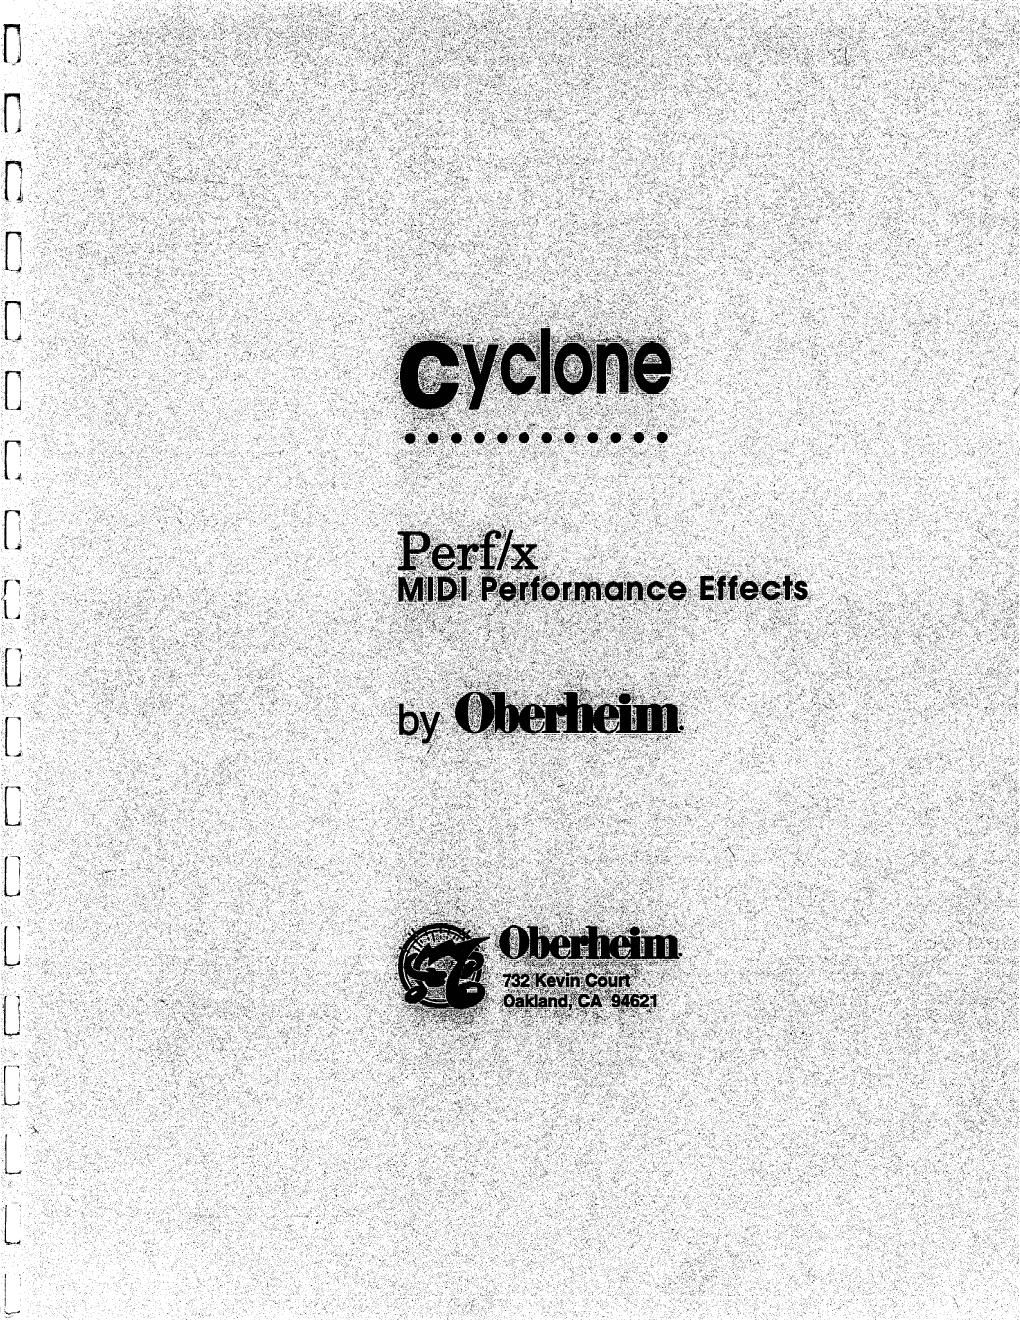 oberheim perf x cyclone users manual